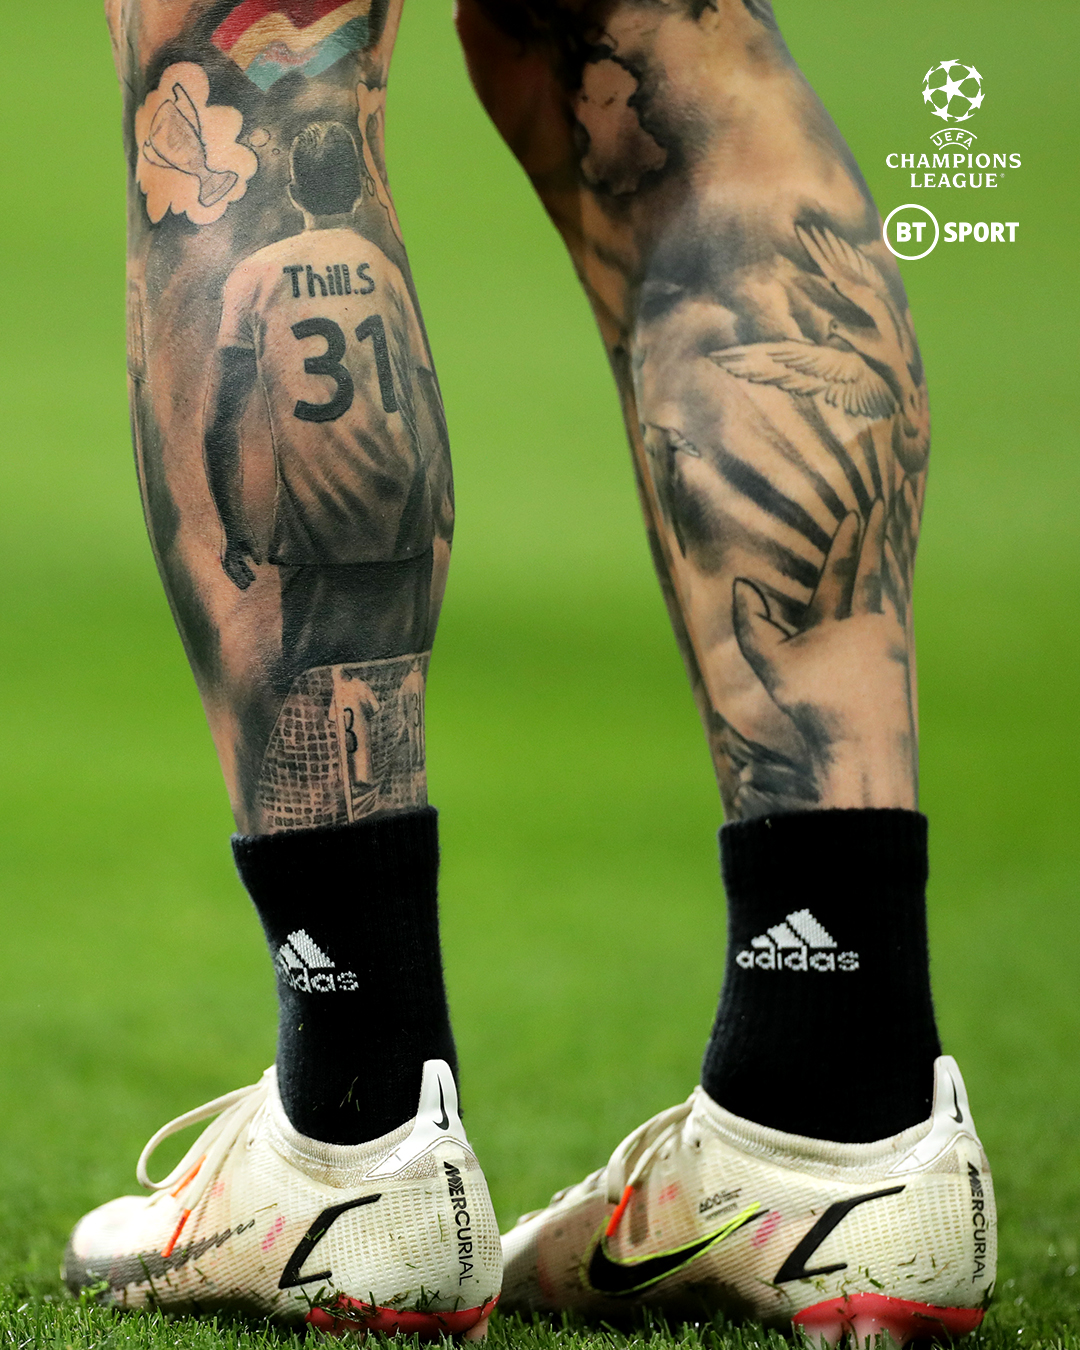 Tattooed Footballs Inspired by Marshawn Lynch Are Amaze-Balls